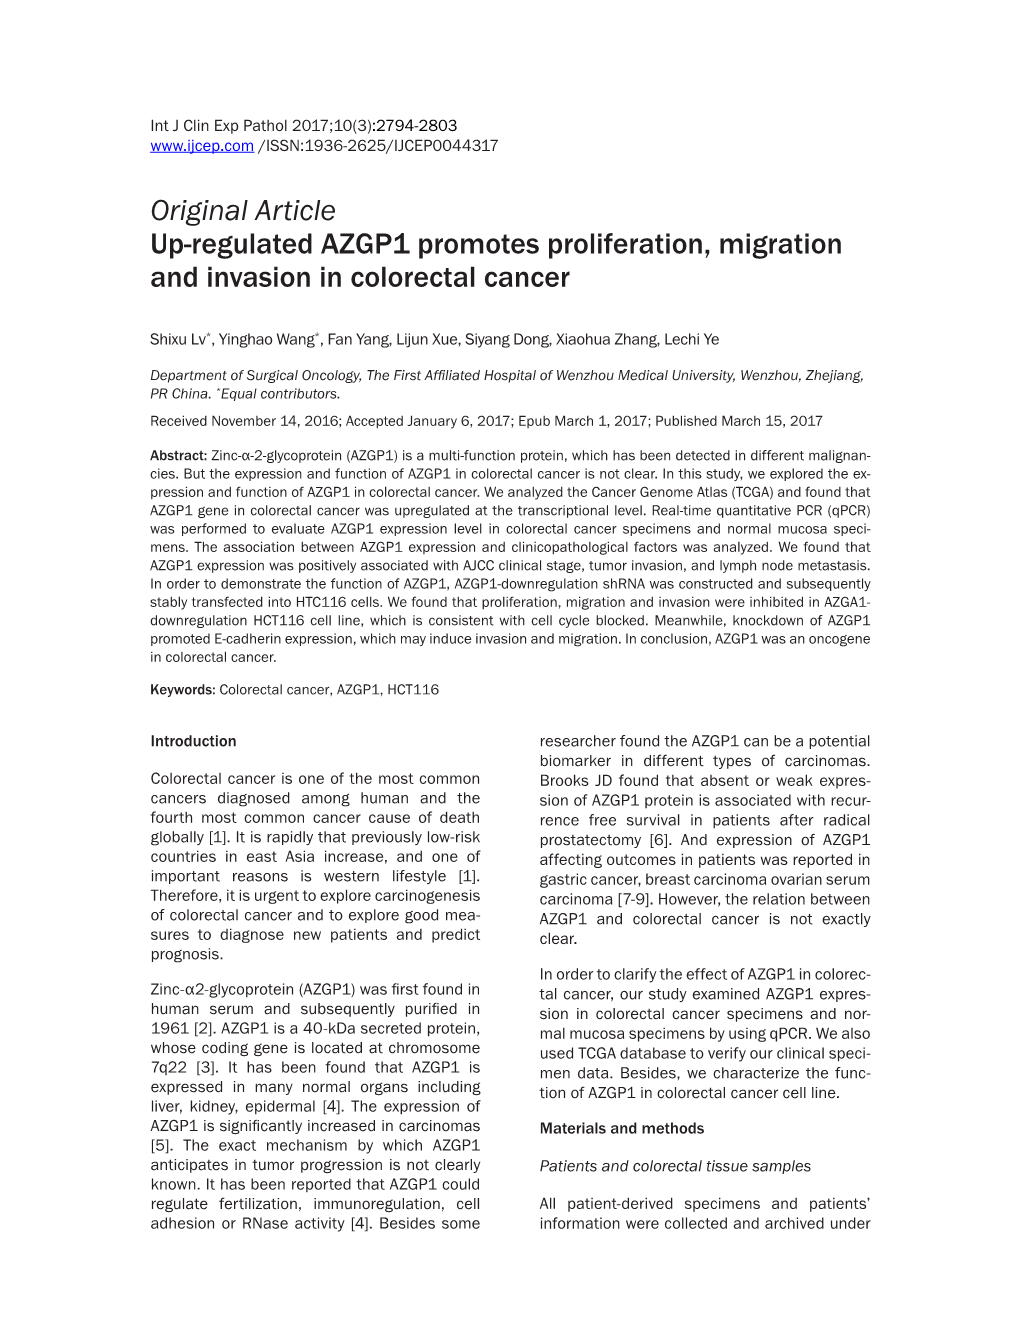 Original Article Up-Regulated AZGP1 Promotes Proliferation, Migration and Invasion in Colorectal Cancer